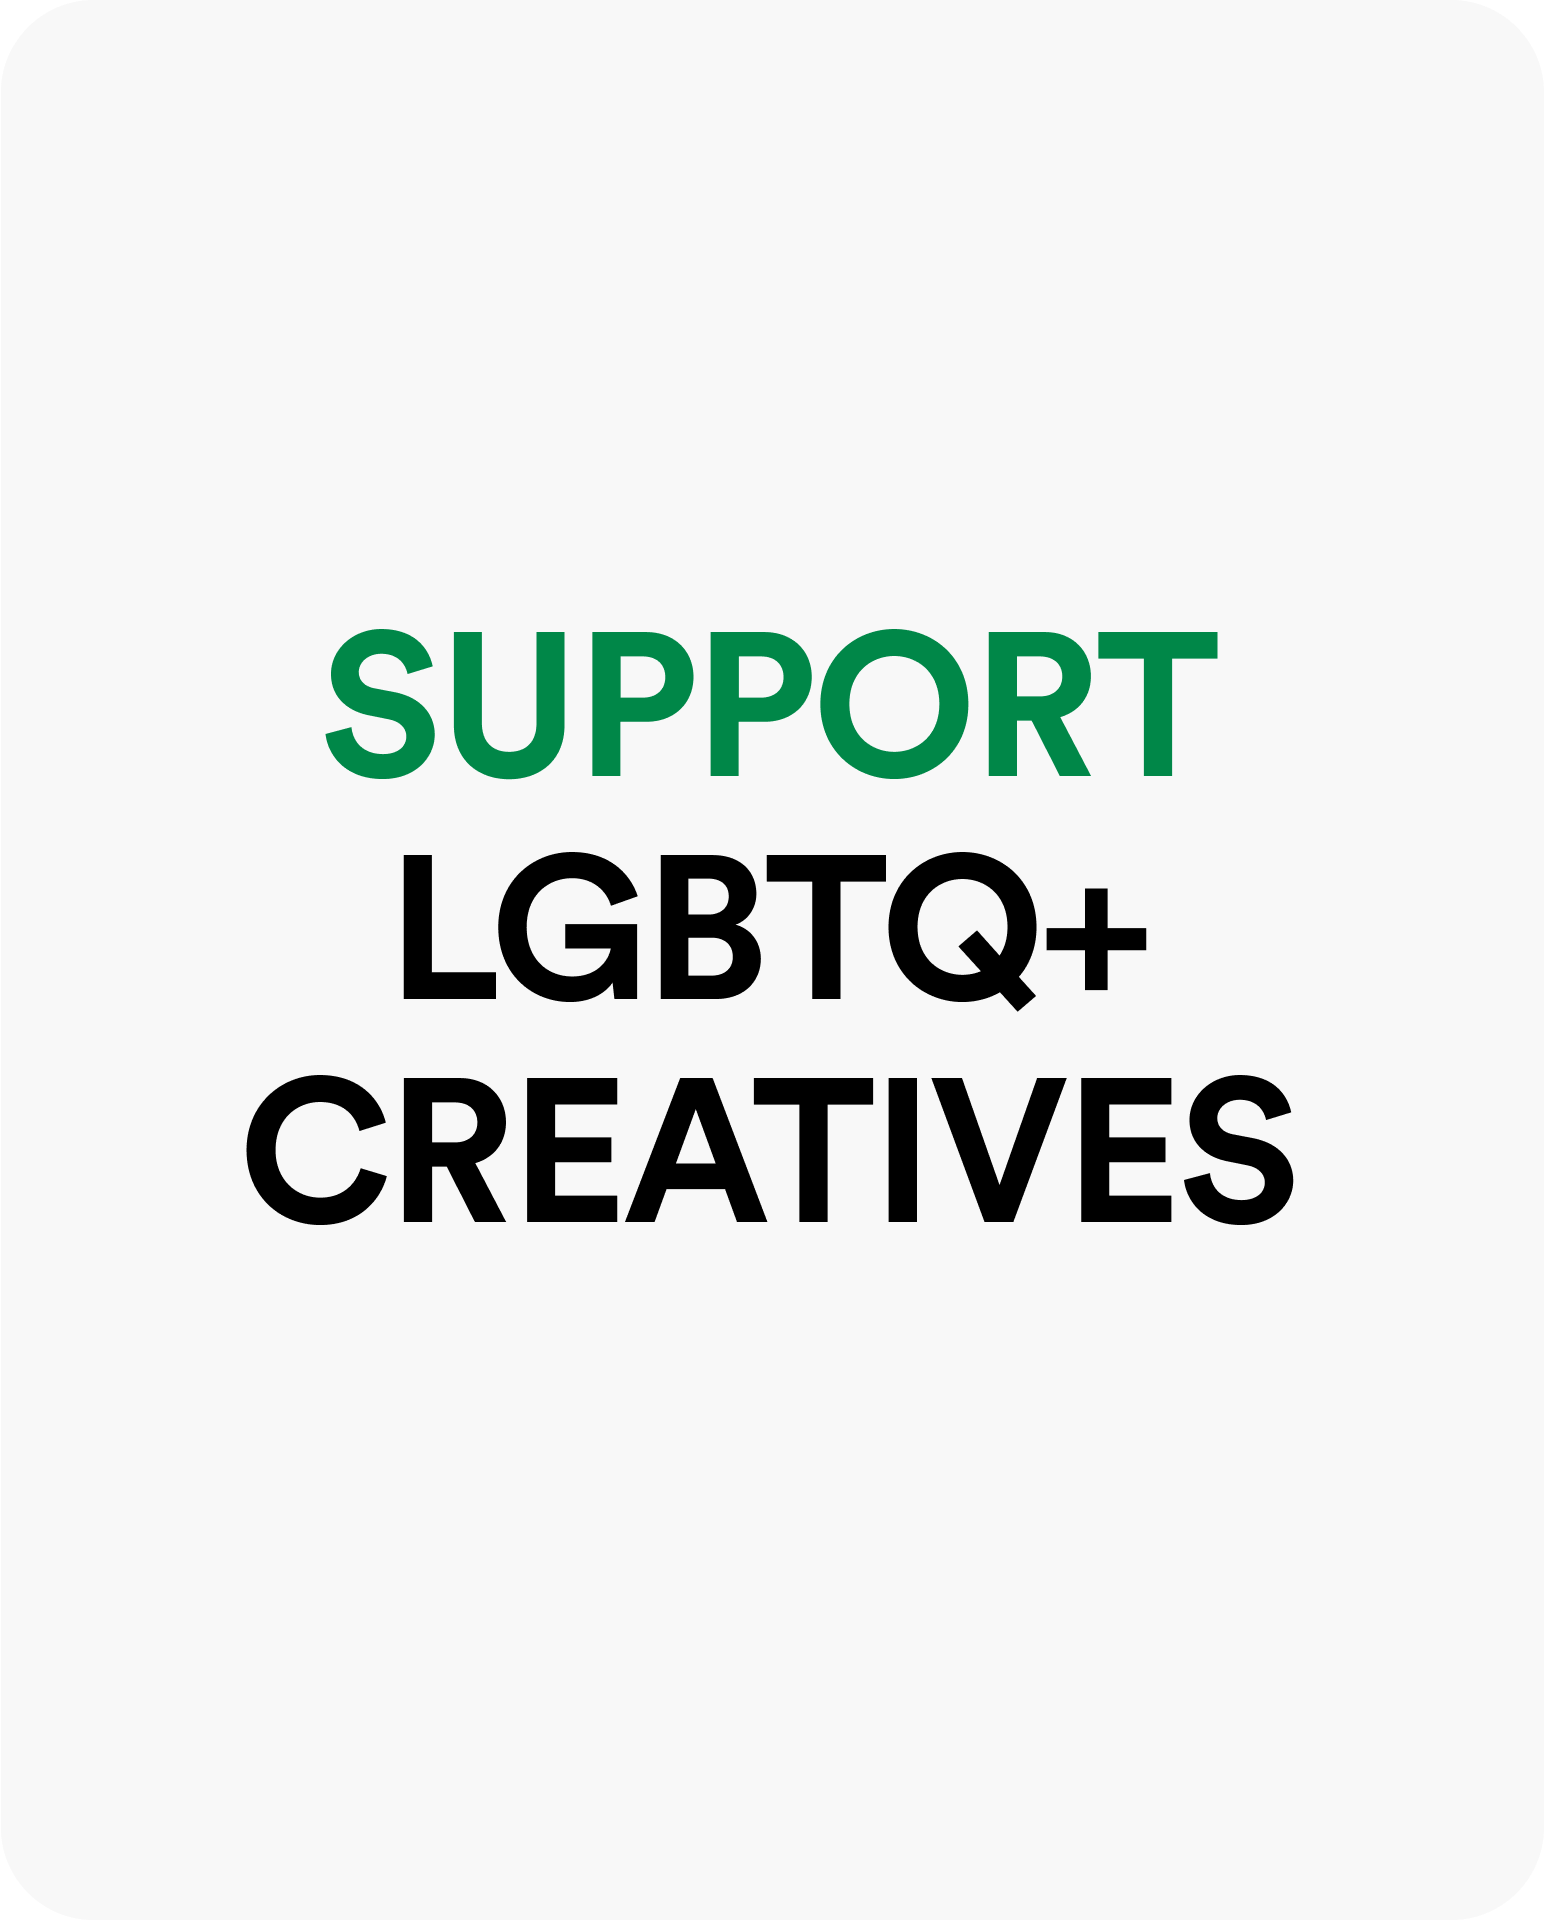 Support LGBTQ+ creatives